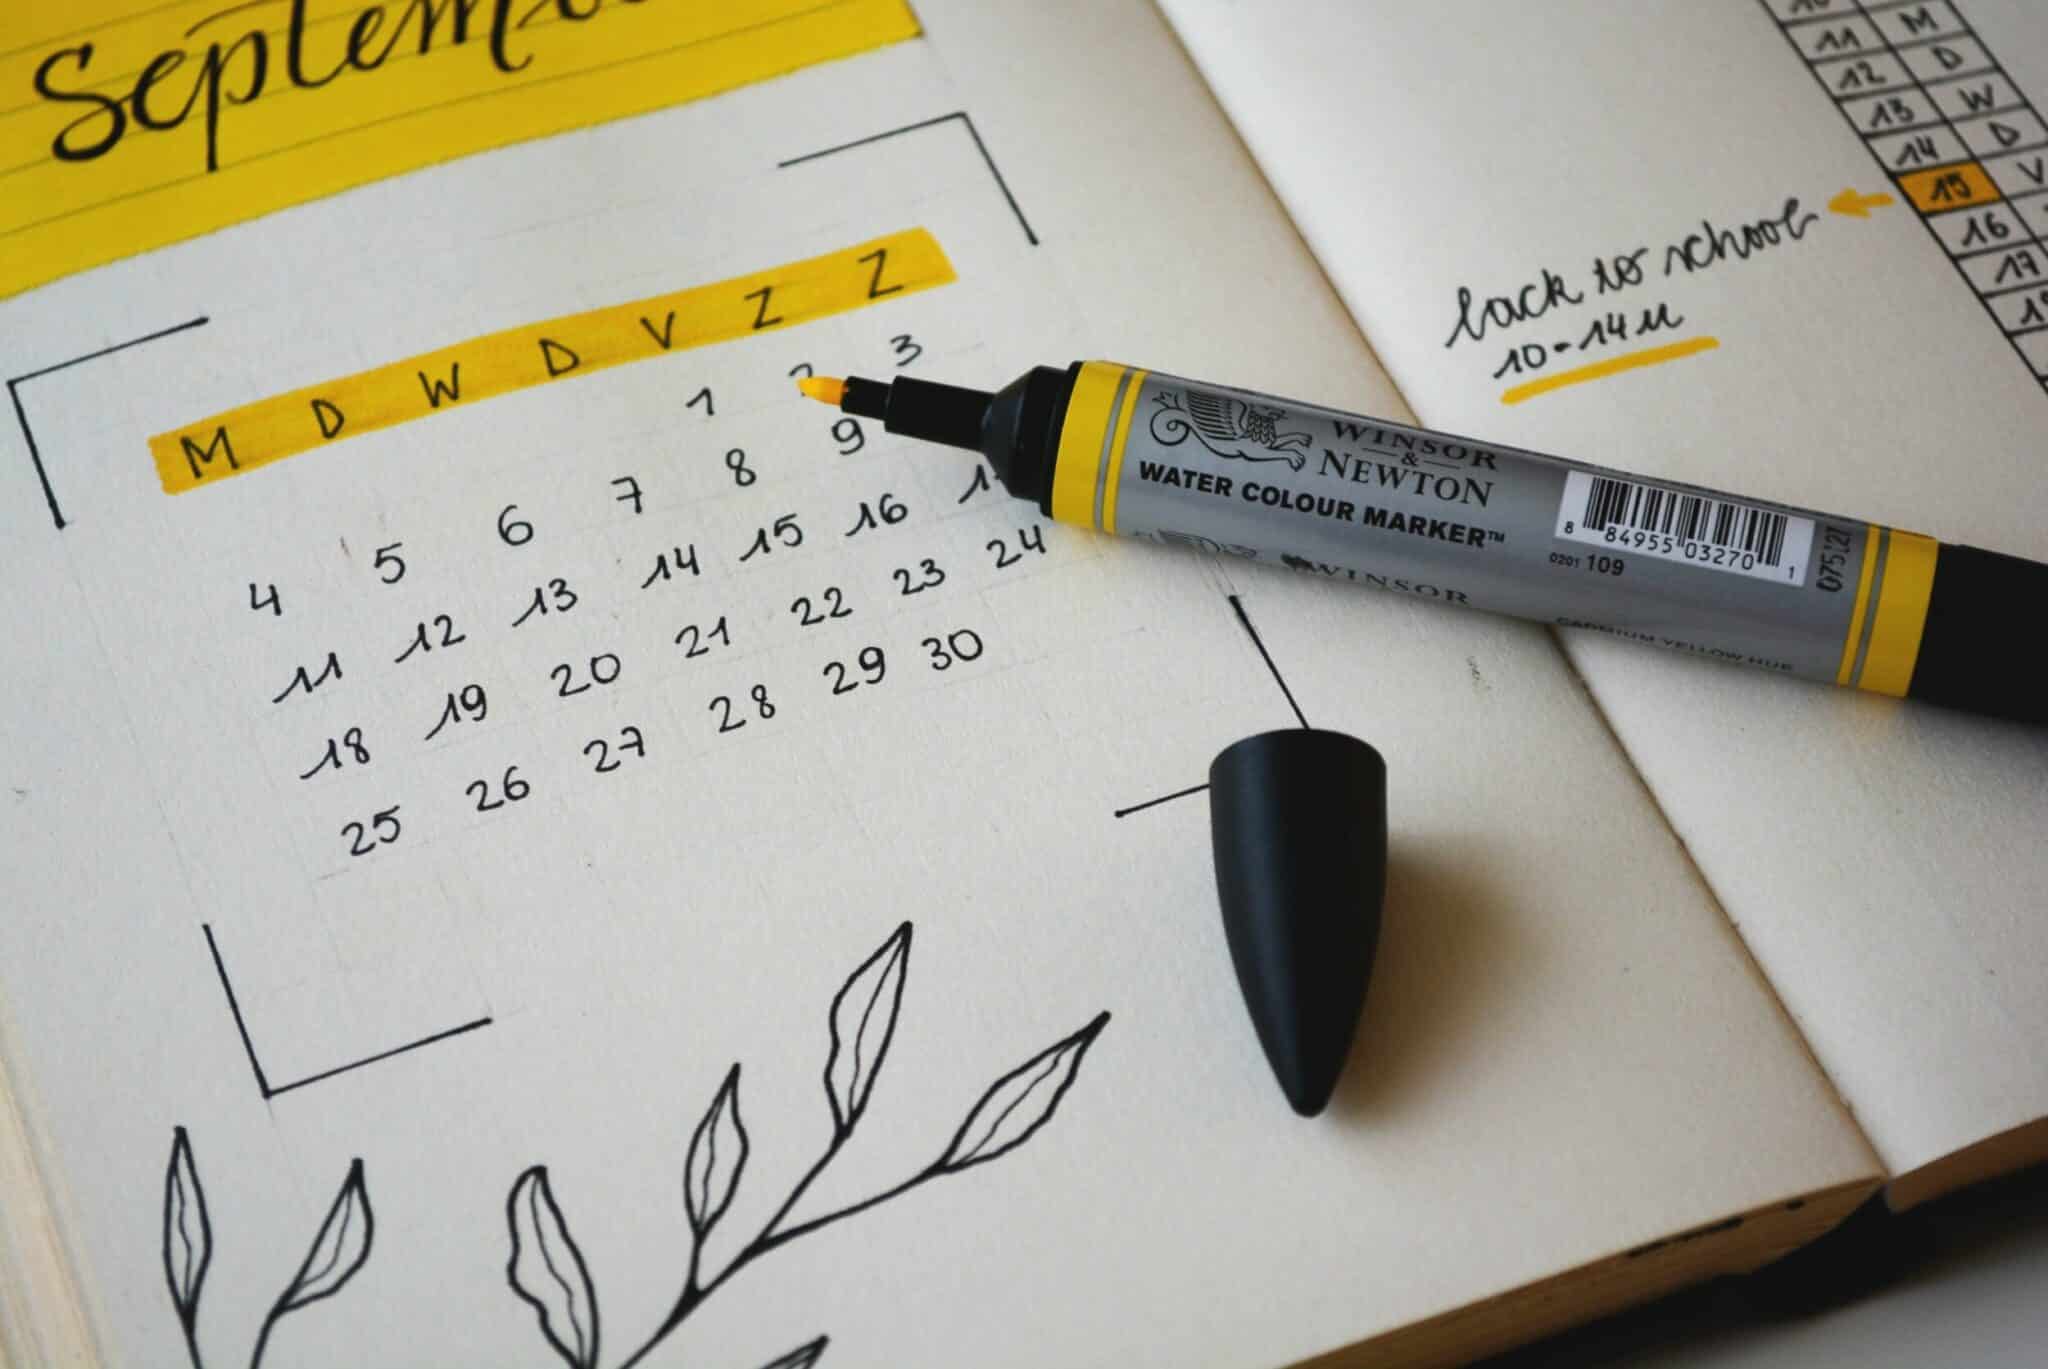 Marker pen crossing off days on calendar